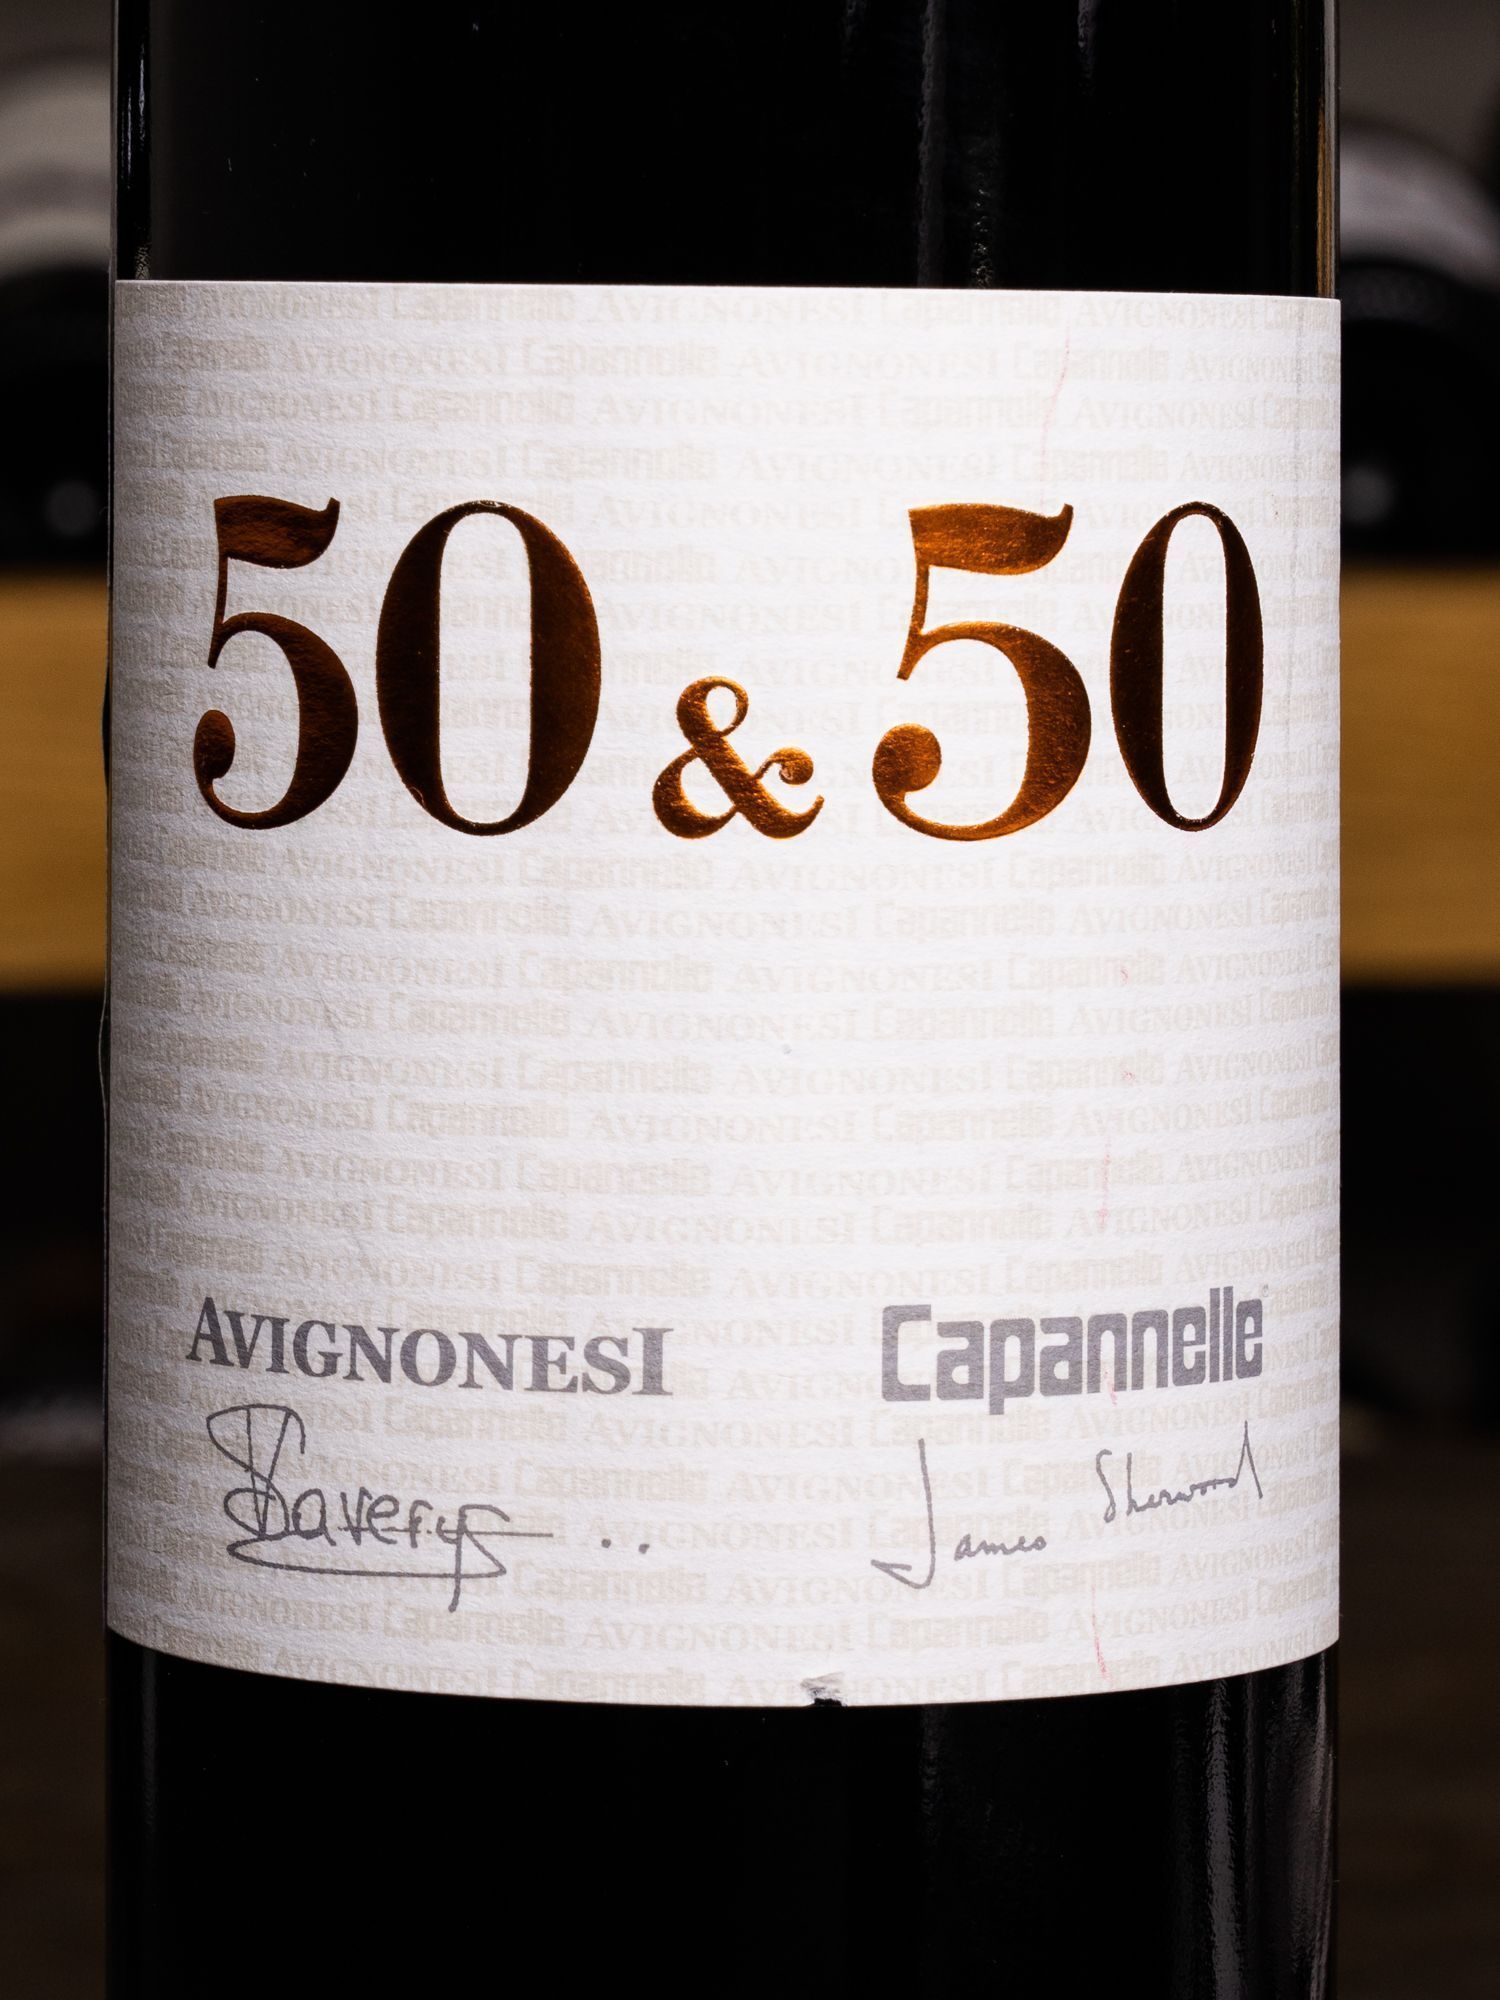 Вино Avignonesi-Capannelle 50 & 50 Toscana 2014 / Авиньонези-Капаннелле 50&50 Тоскана 2014